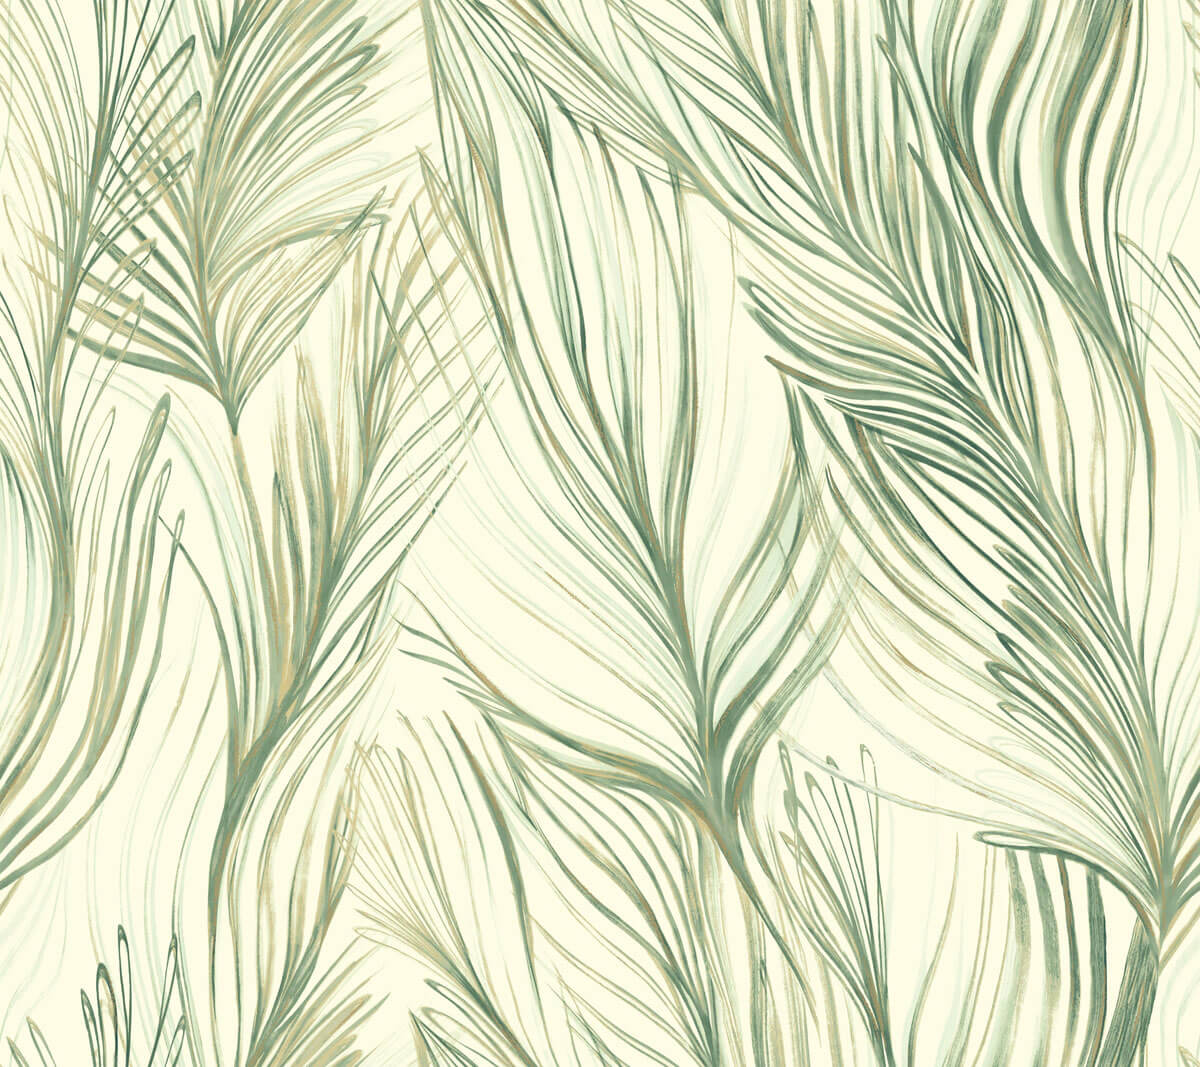 Candice Olson Botanical Dreams Peaceful Plume Wallpaper - Green